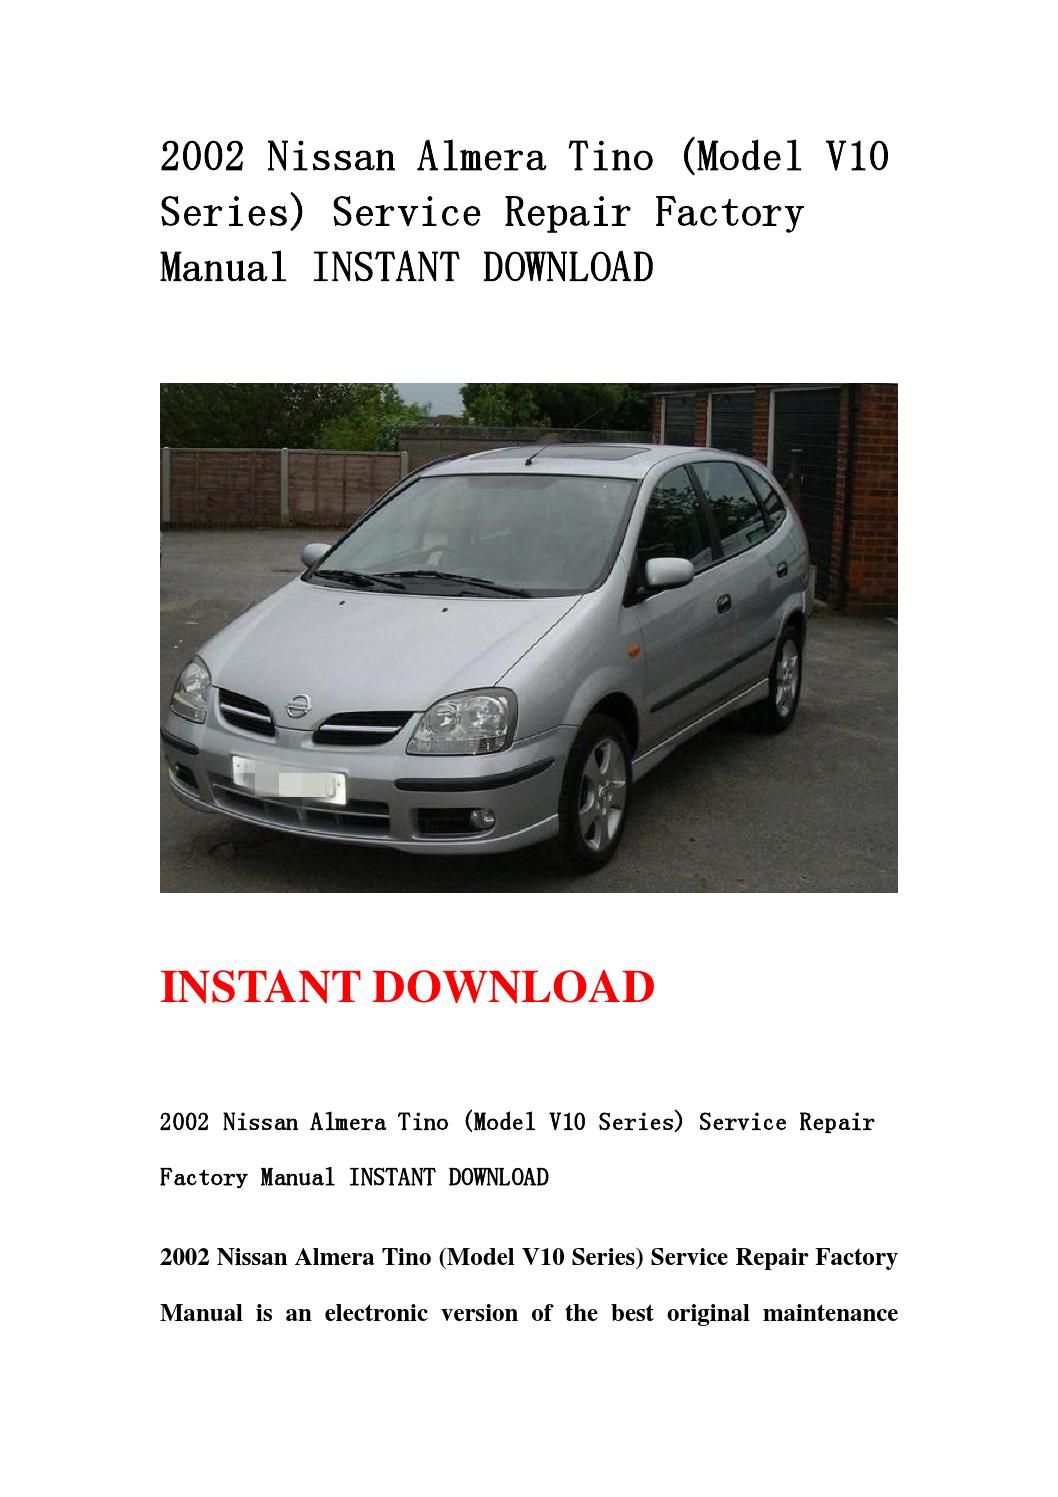 Nissan almera tino owners manual free download